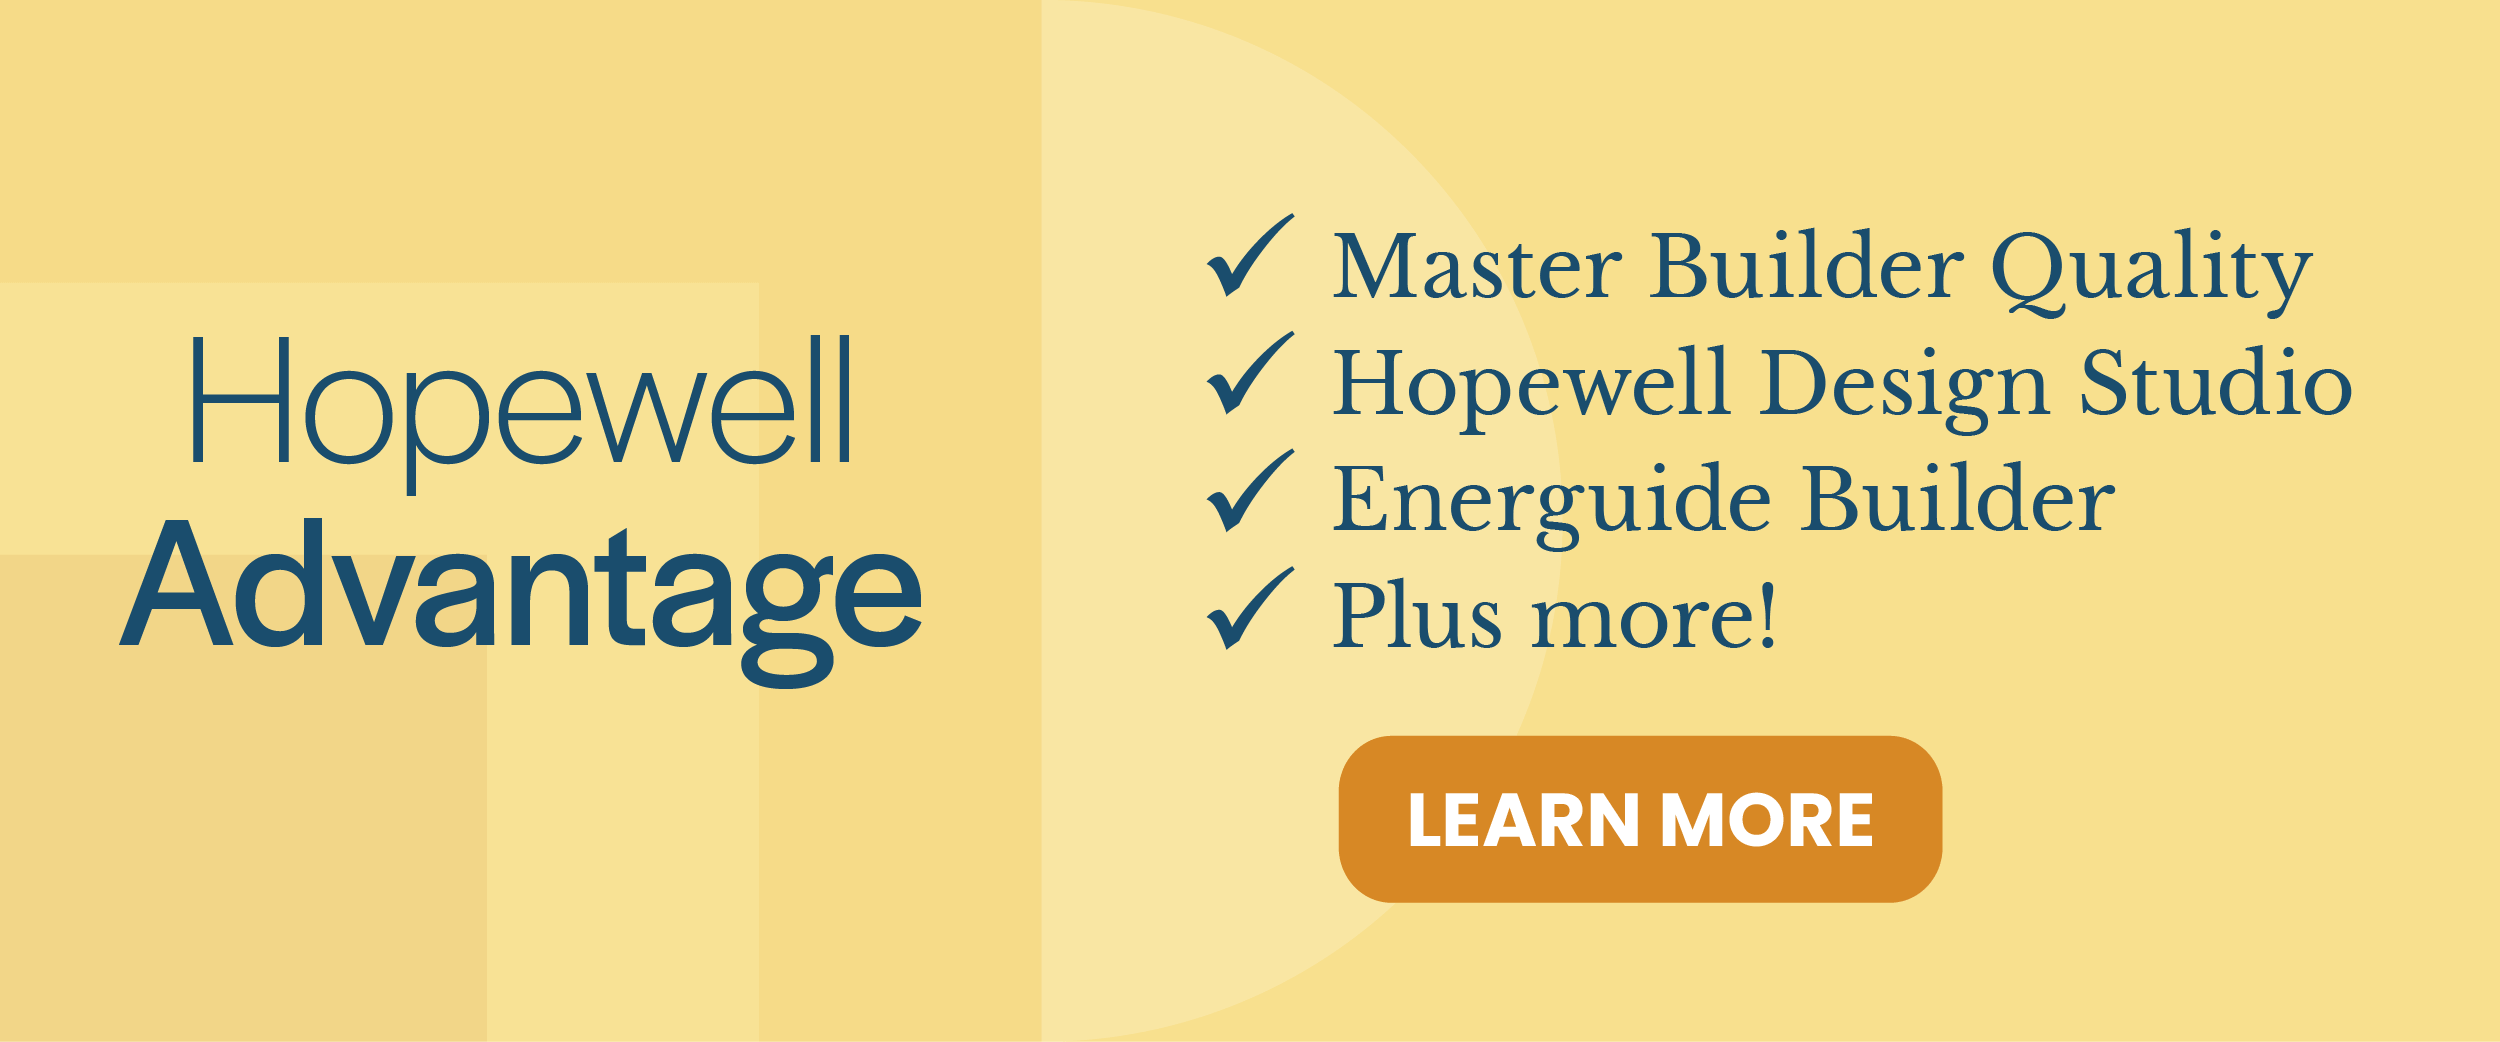 Hopewell Advantage information